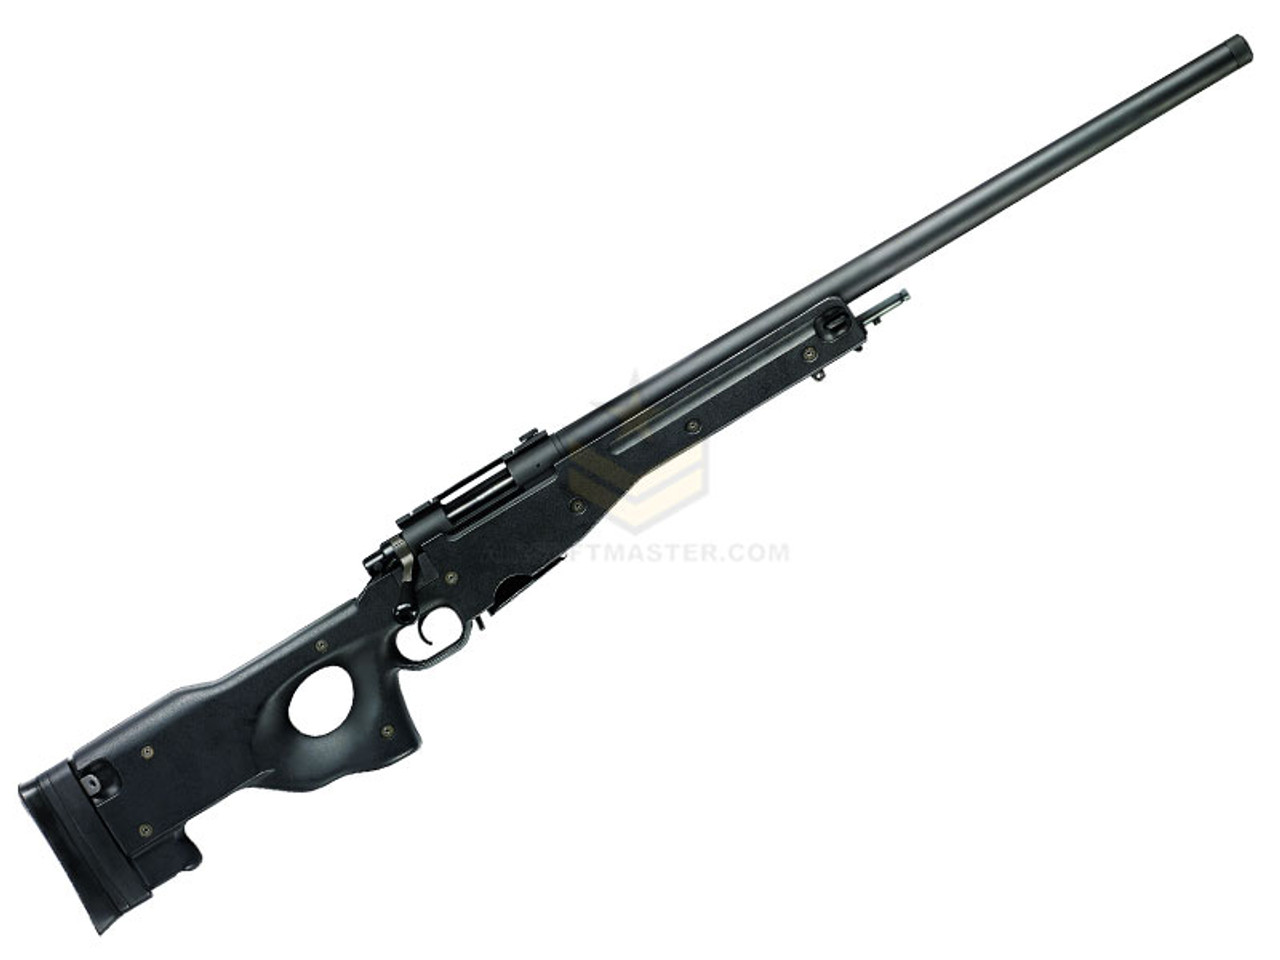 G&G G96 Gas Sniper Rifle Black